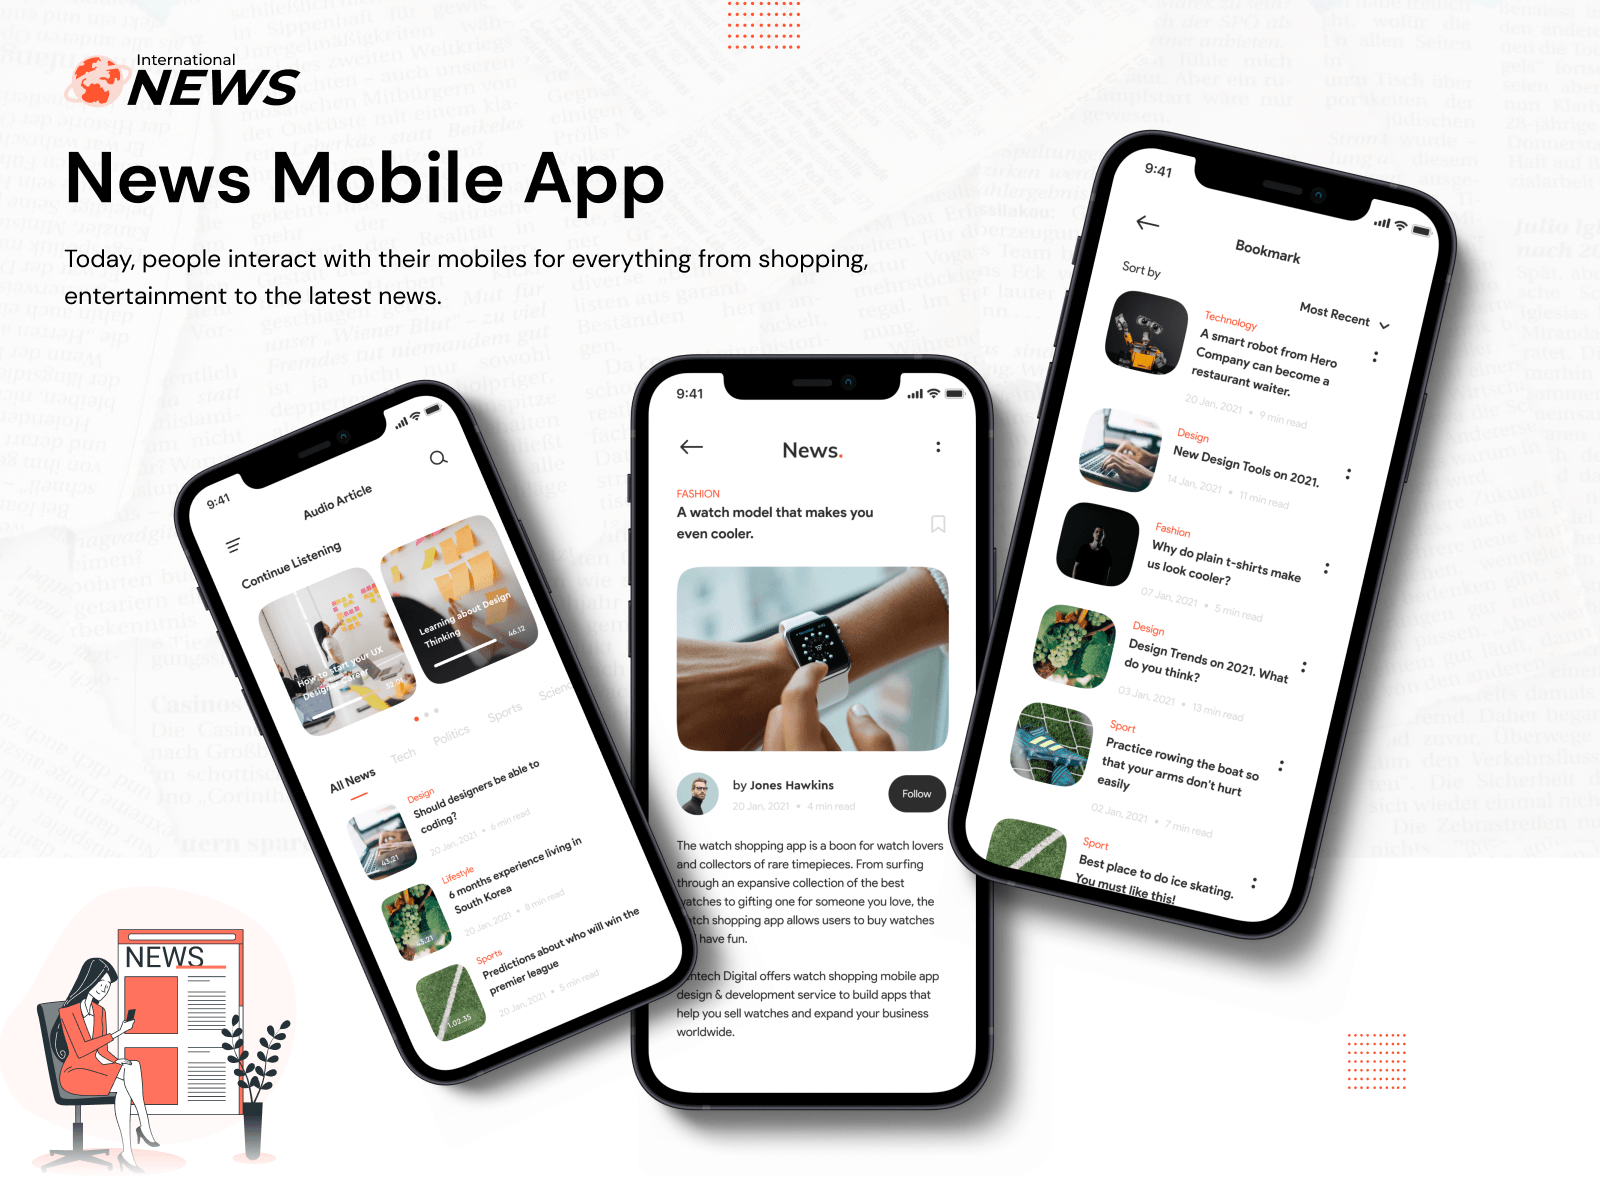 News App